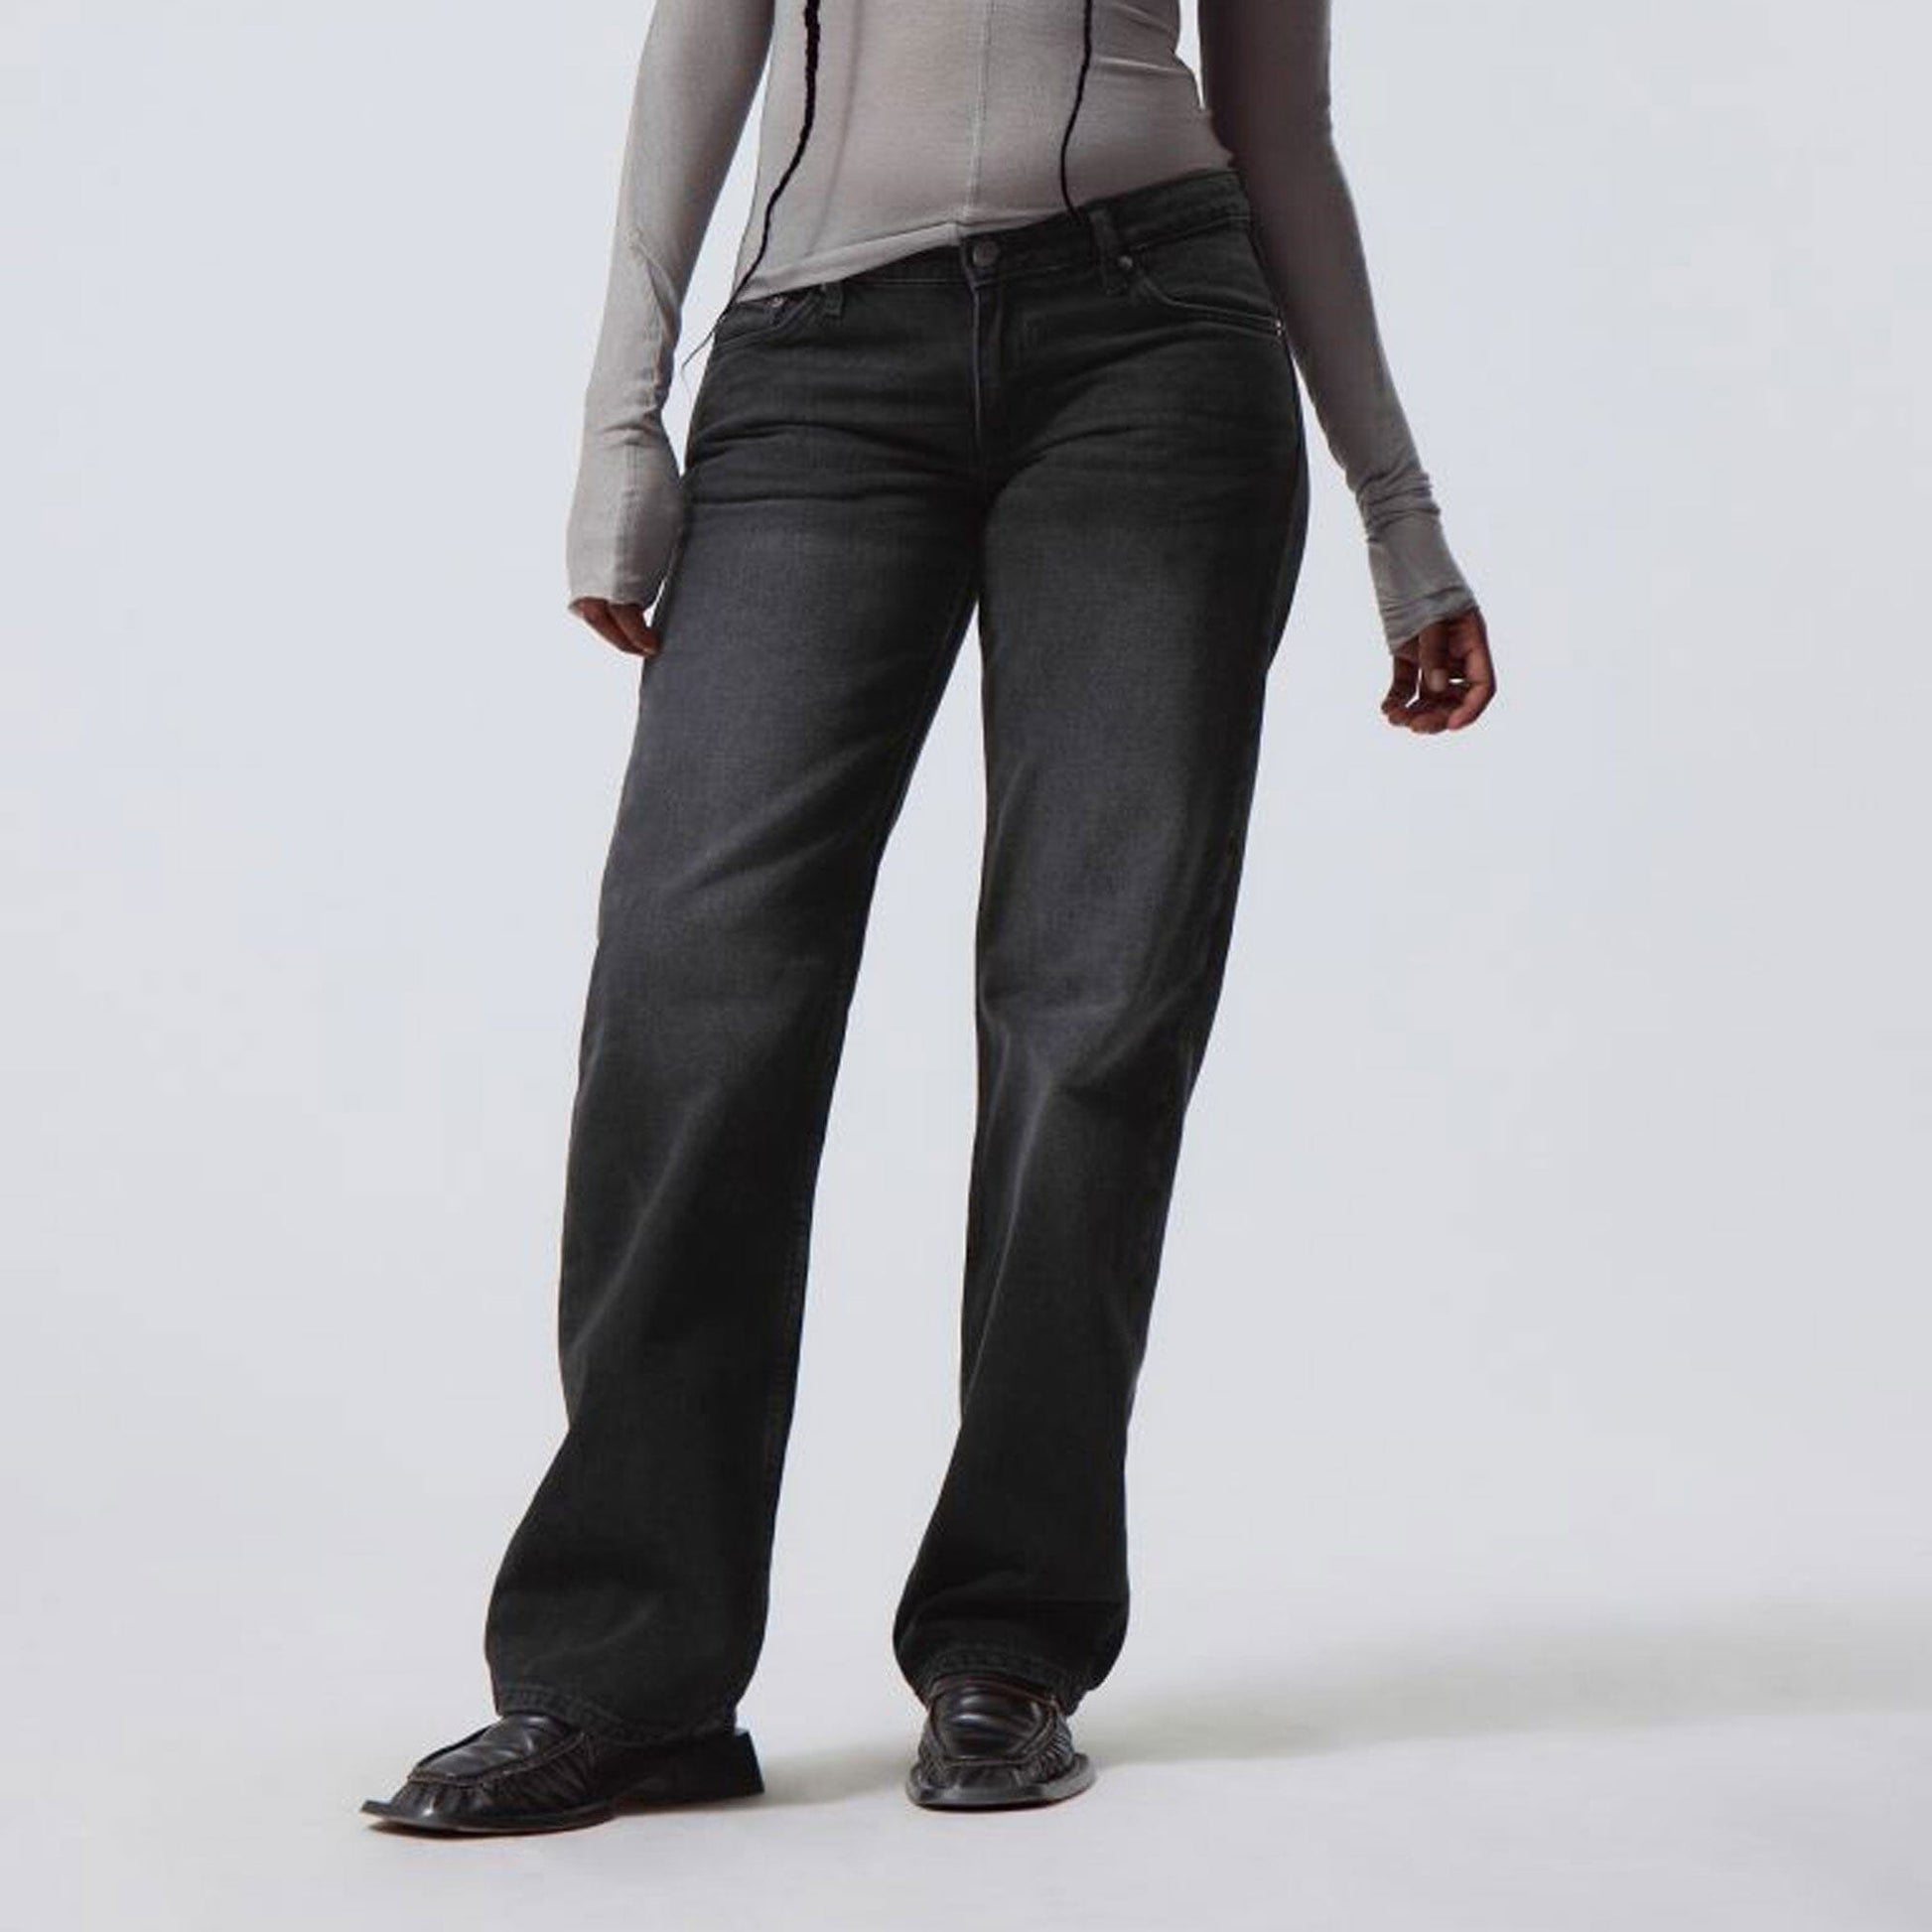 Weekday Women's Straight Fit Boot Cut Classic Denim Jeans Women's Denim HAS Apparel Black 24 28